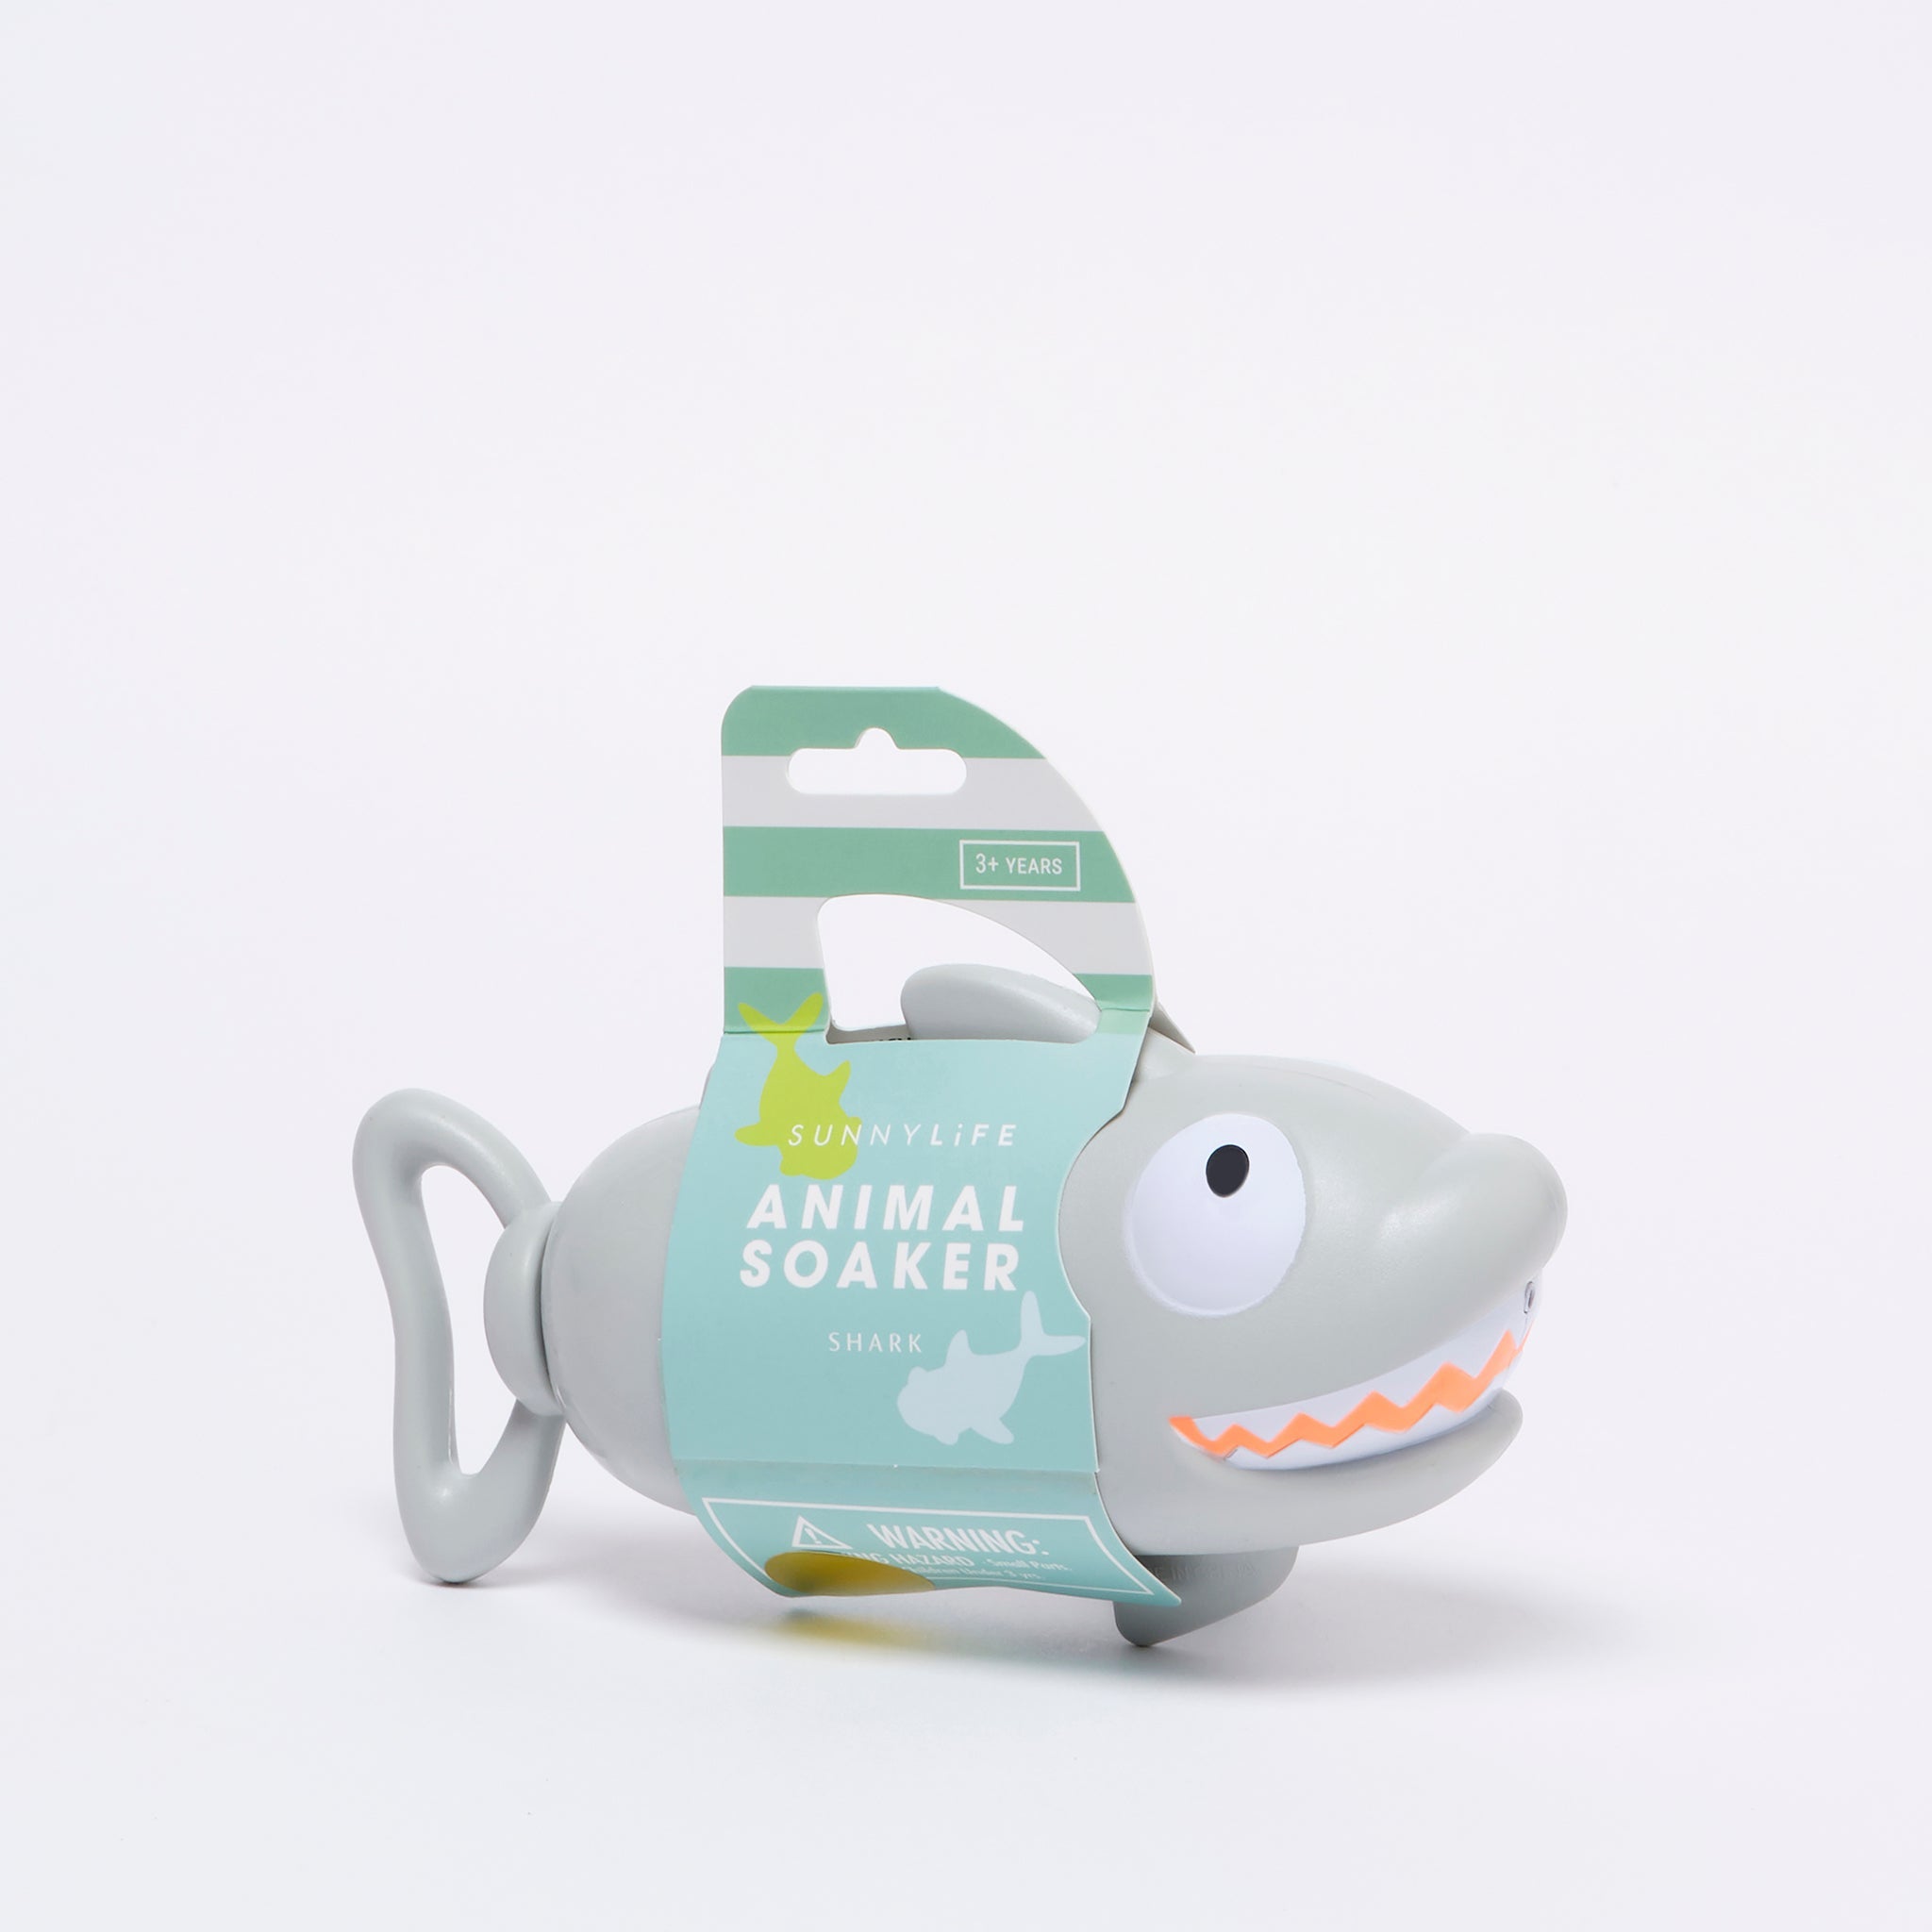 SUNNYLiFE |Animal Soaker | Shark